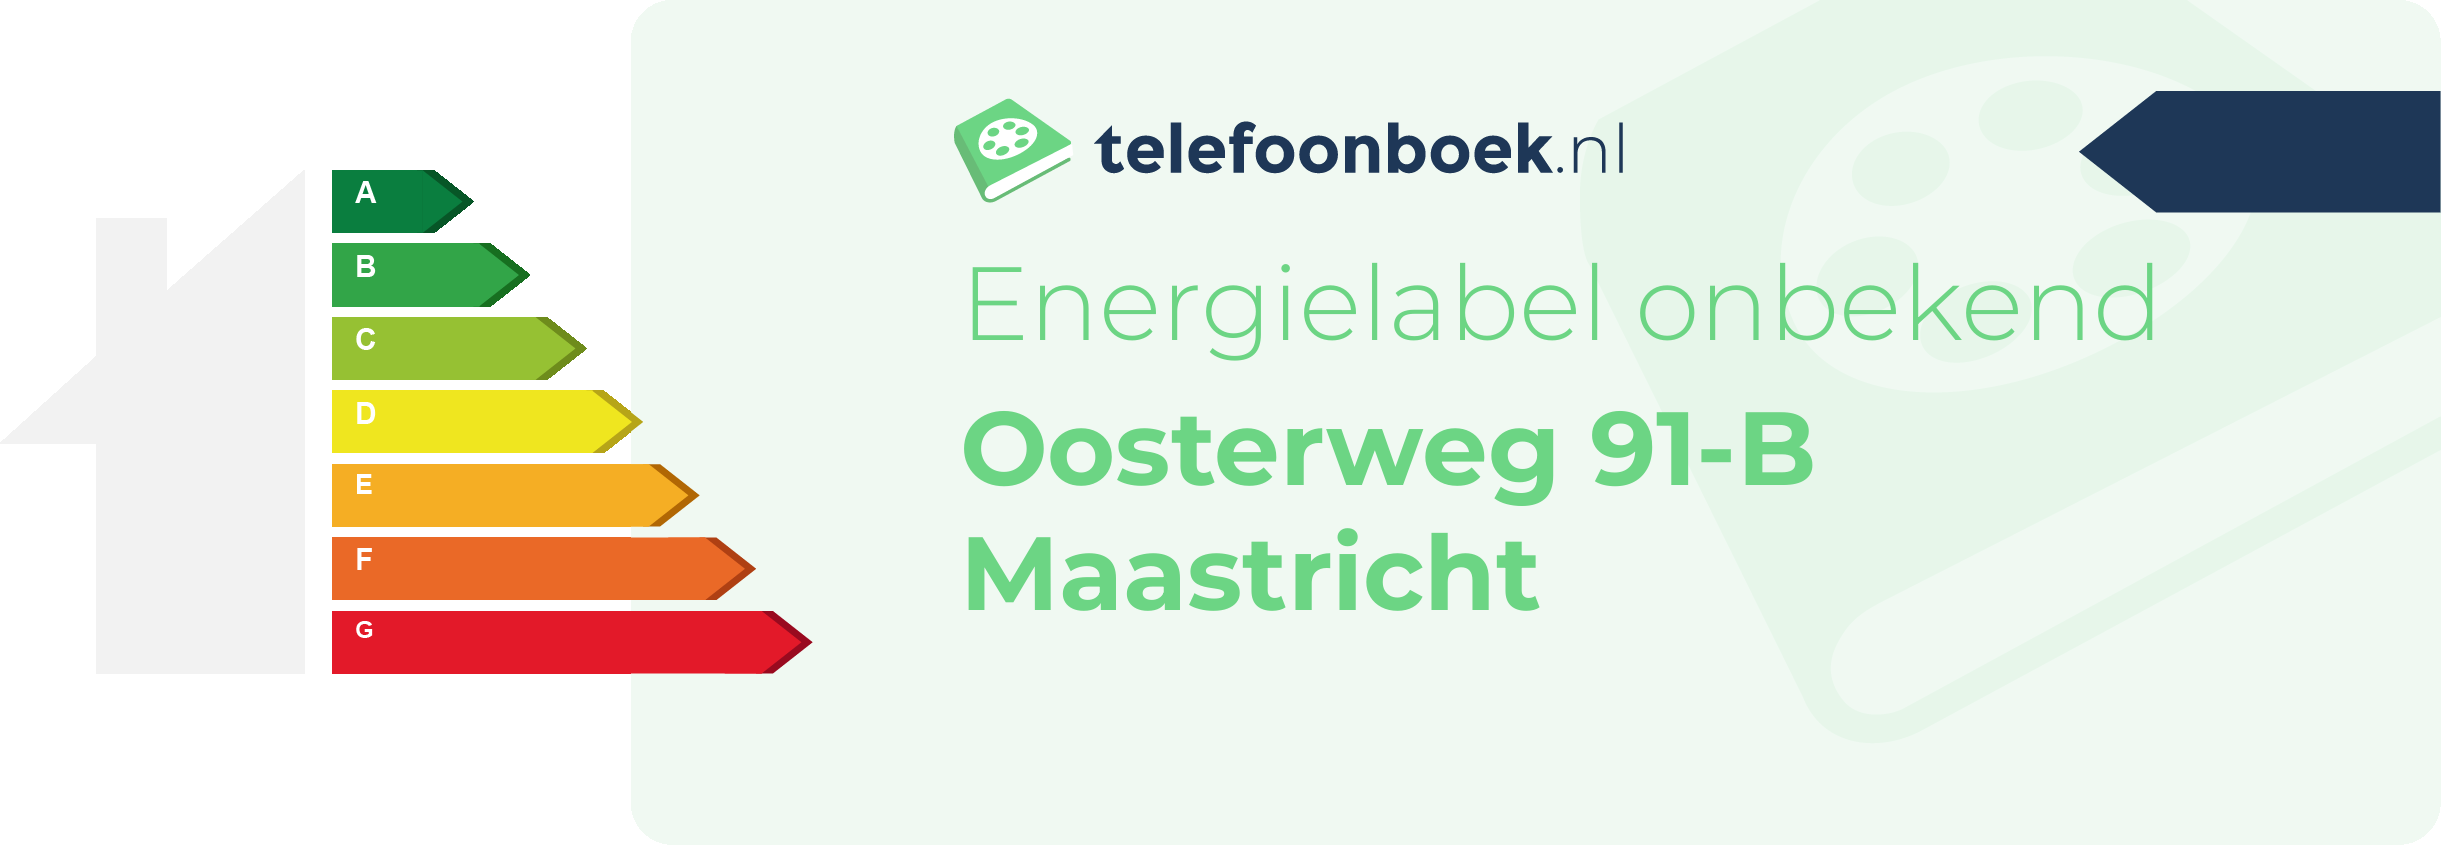 Energielabel Oosterweg 91-B Maastricht